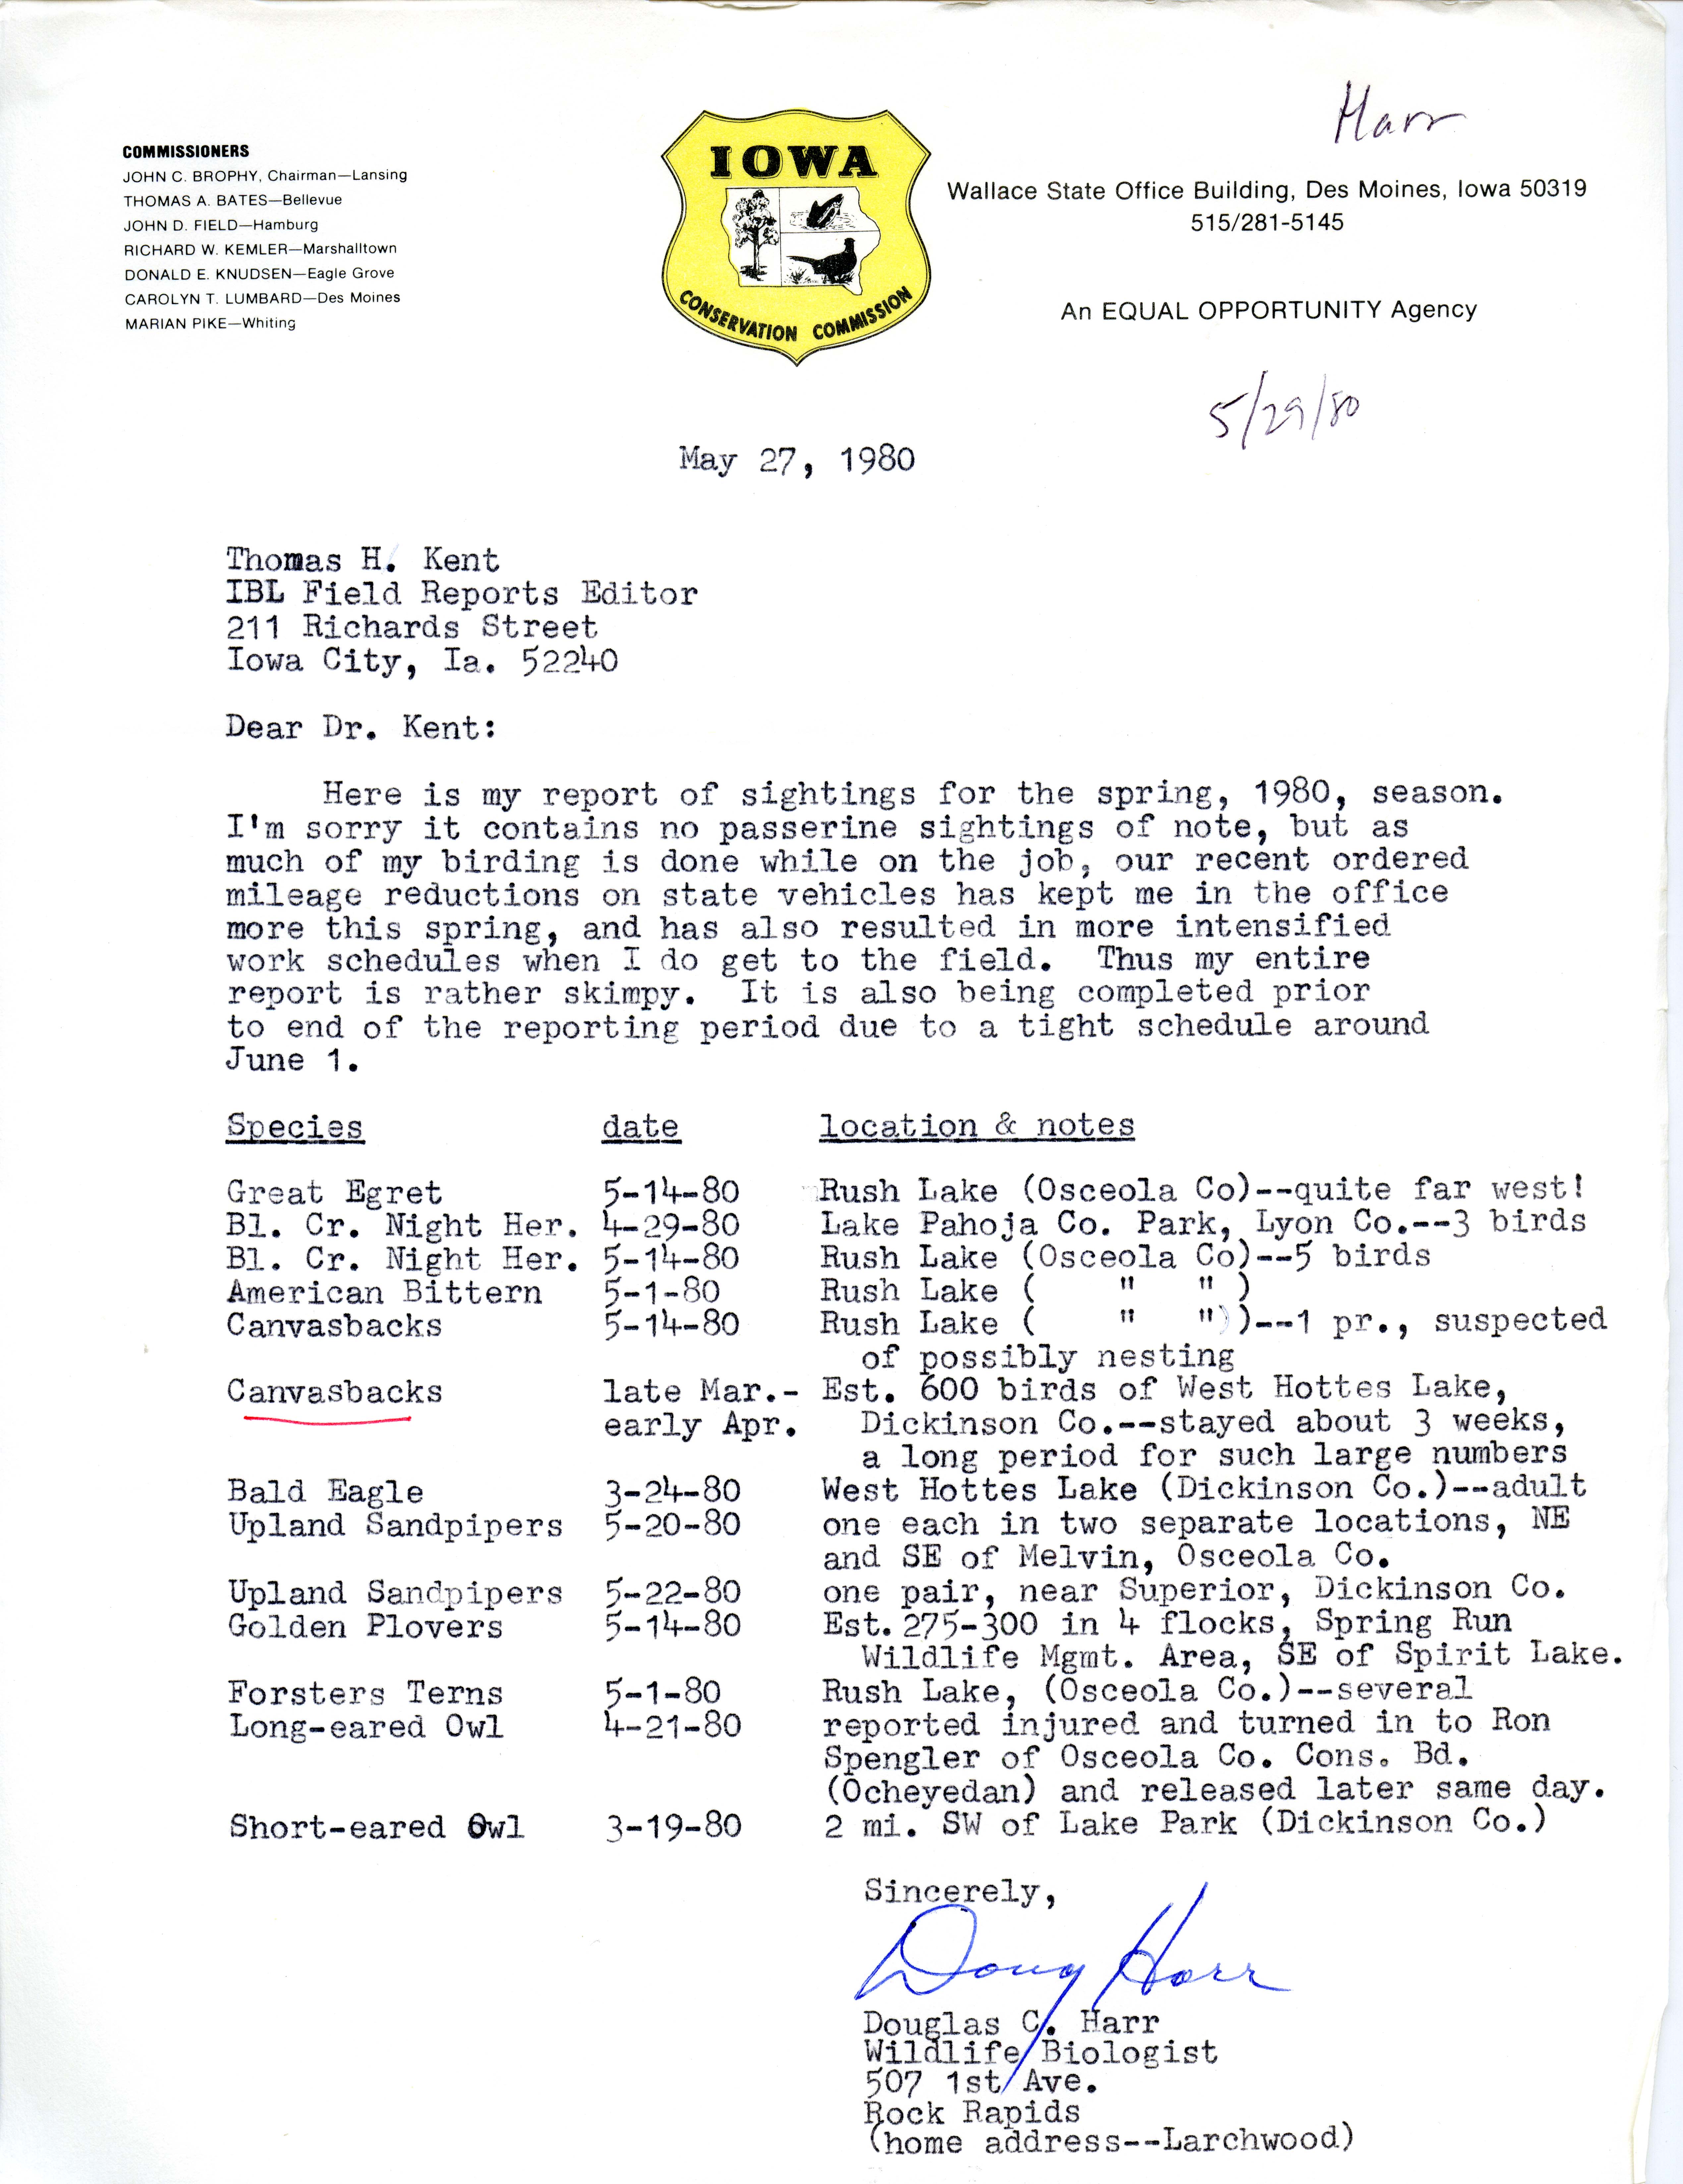 Douglas C. Harr letter to Thomas H. Kent regarding bird sightings, May 27, 1980